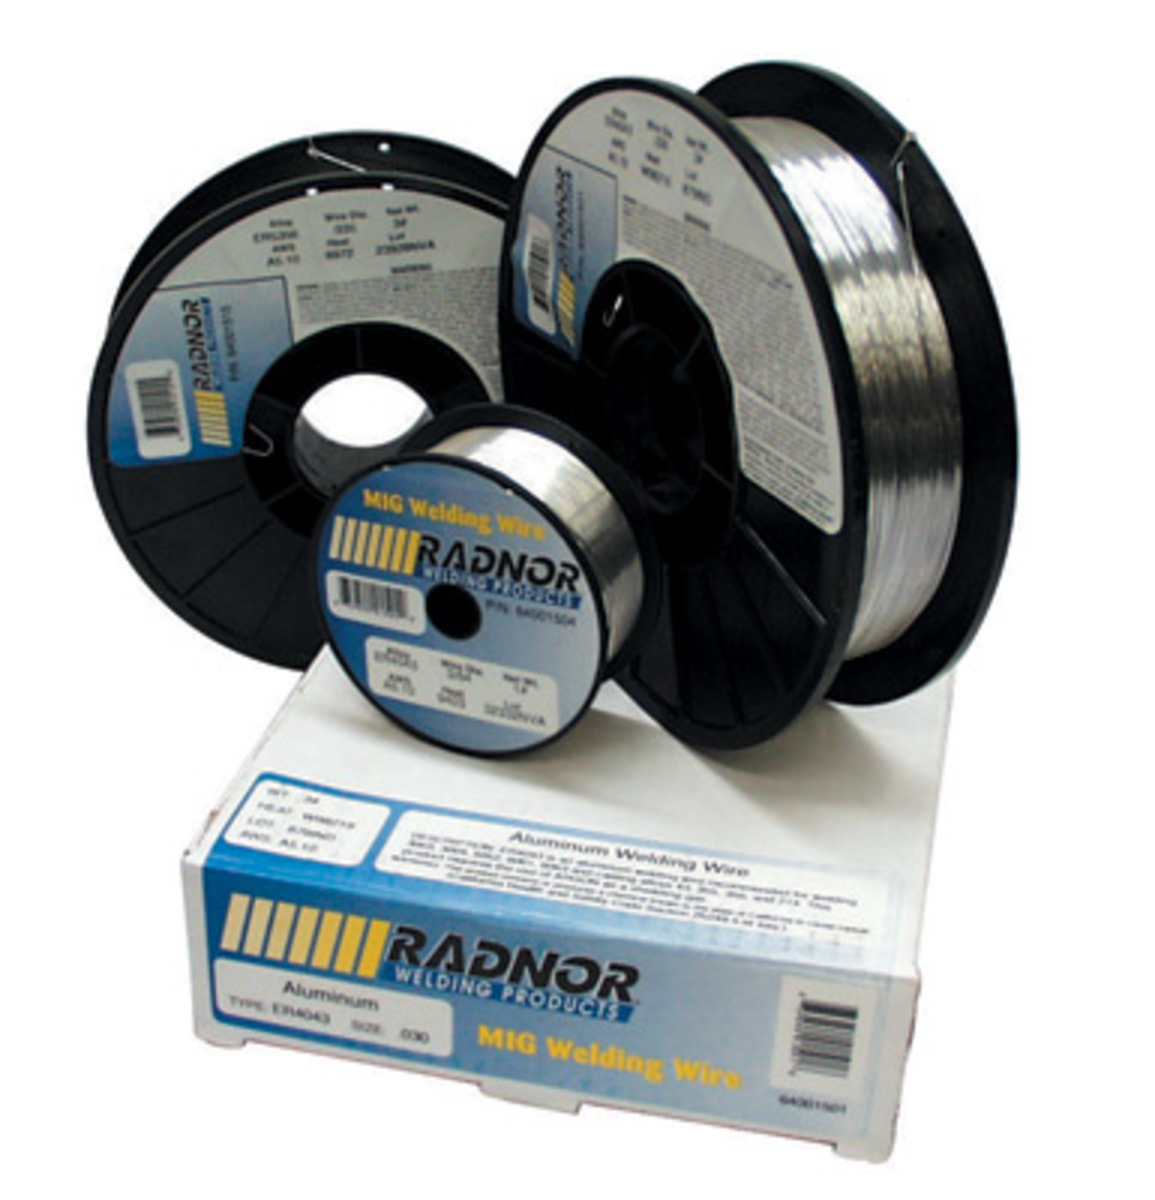 3/64 ER4043 Radnor 4043 Aluminum MIG Wire 1 Spool 